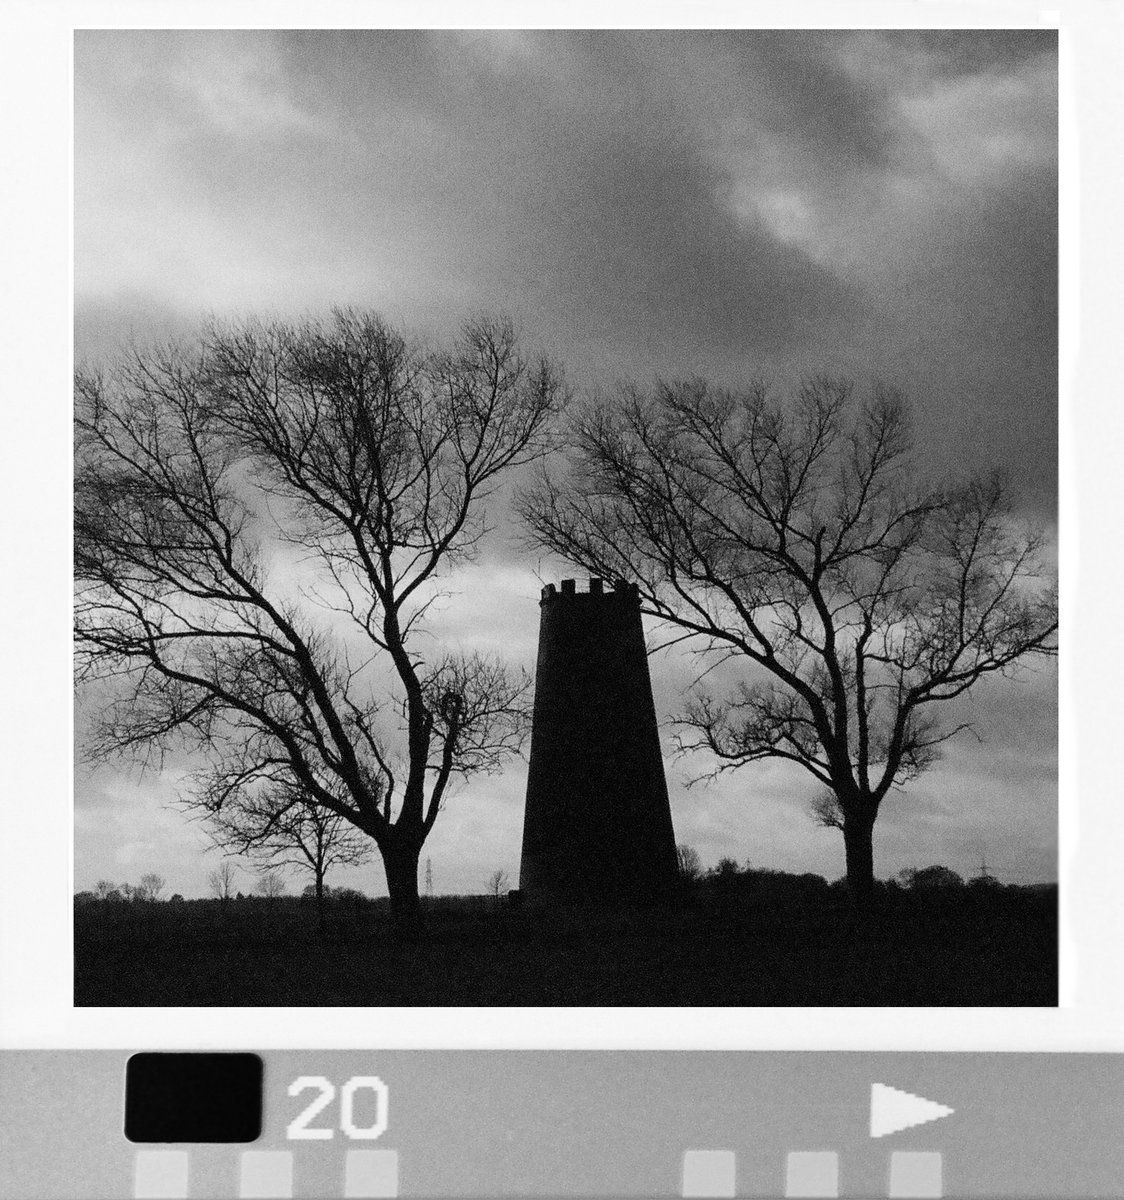 Black Mill #bnw #bnwphotography #blackandwhite #blackandwhitephotography #monochrome #dolmen #cornwall #filmphotography #filmphotography #filmisnotdead #126film #analoguephotography #analog #vintage #lomography #filmcamera #126camera #126film #126photo